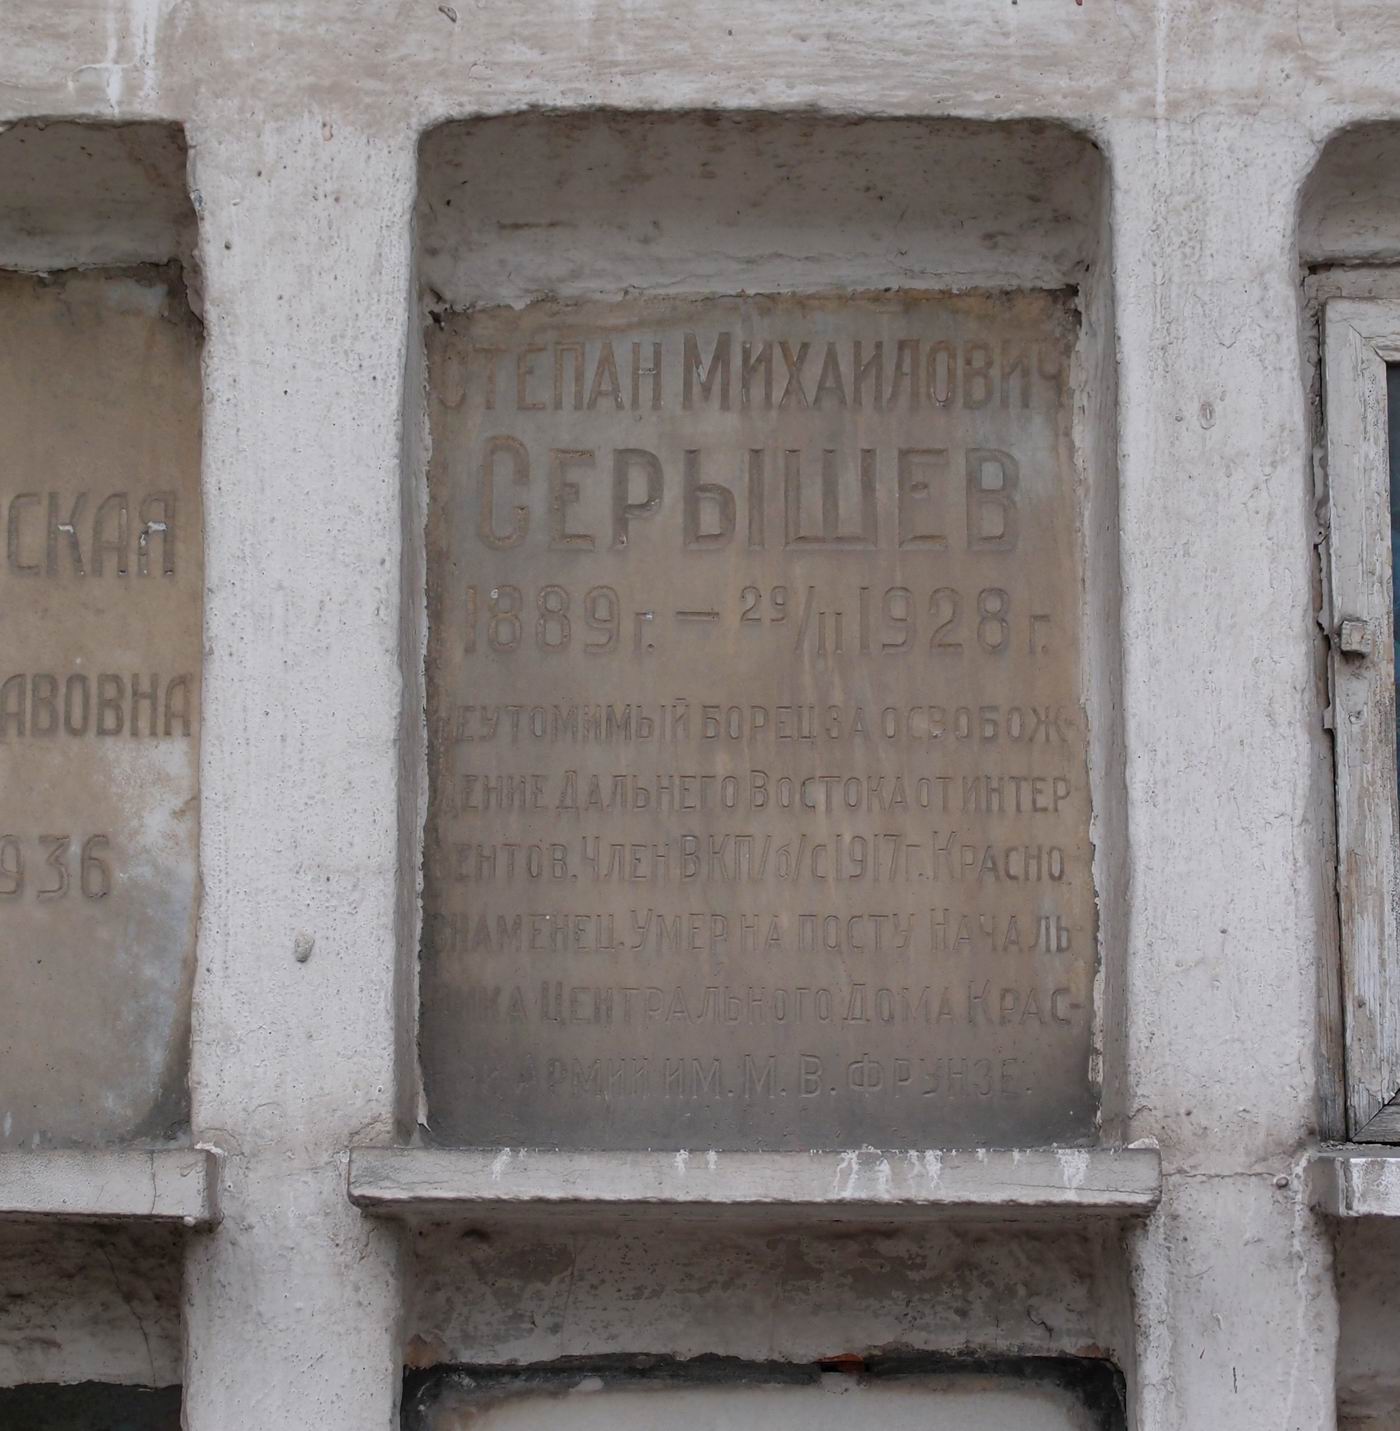 Плита на нише Серышева С.М. (1889-1928), на Новодевичьем кладбище (колумбарий [7]-5-1).